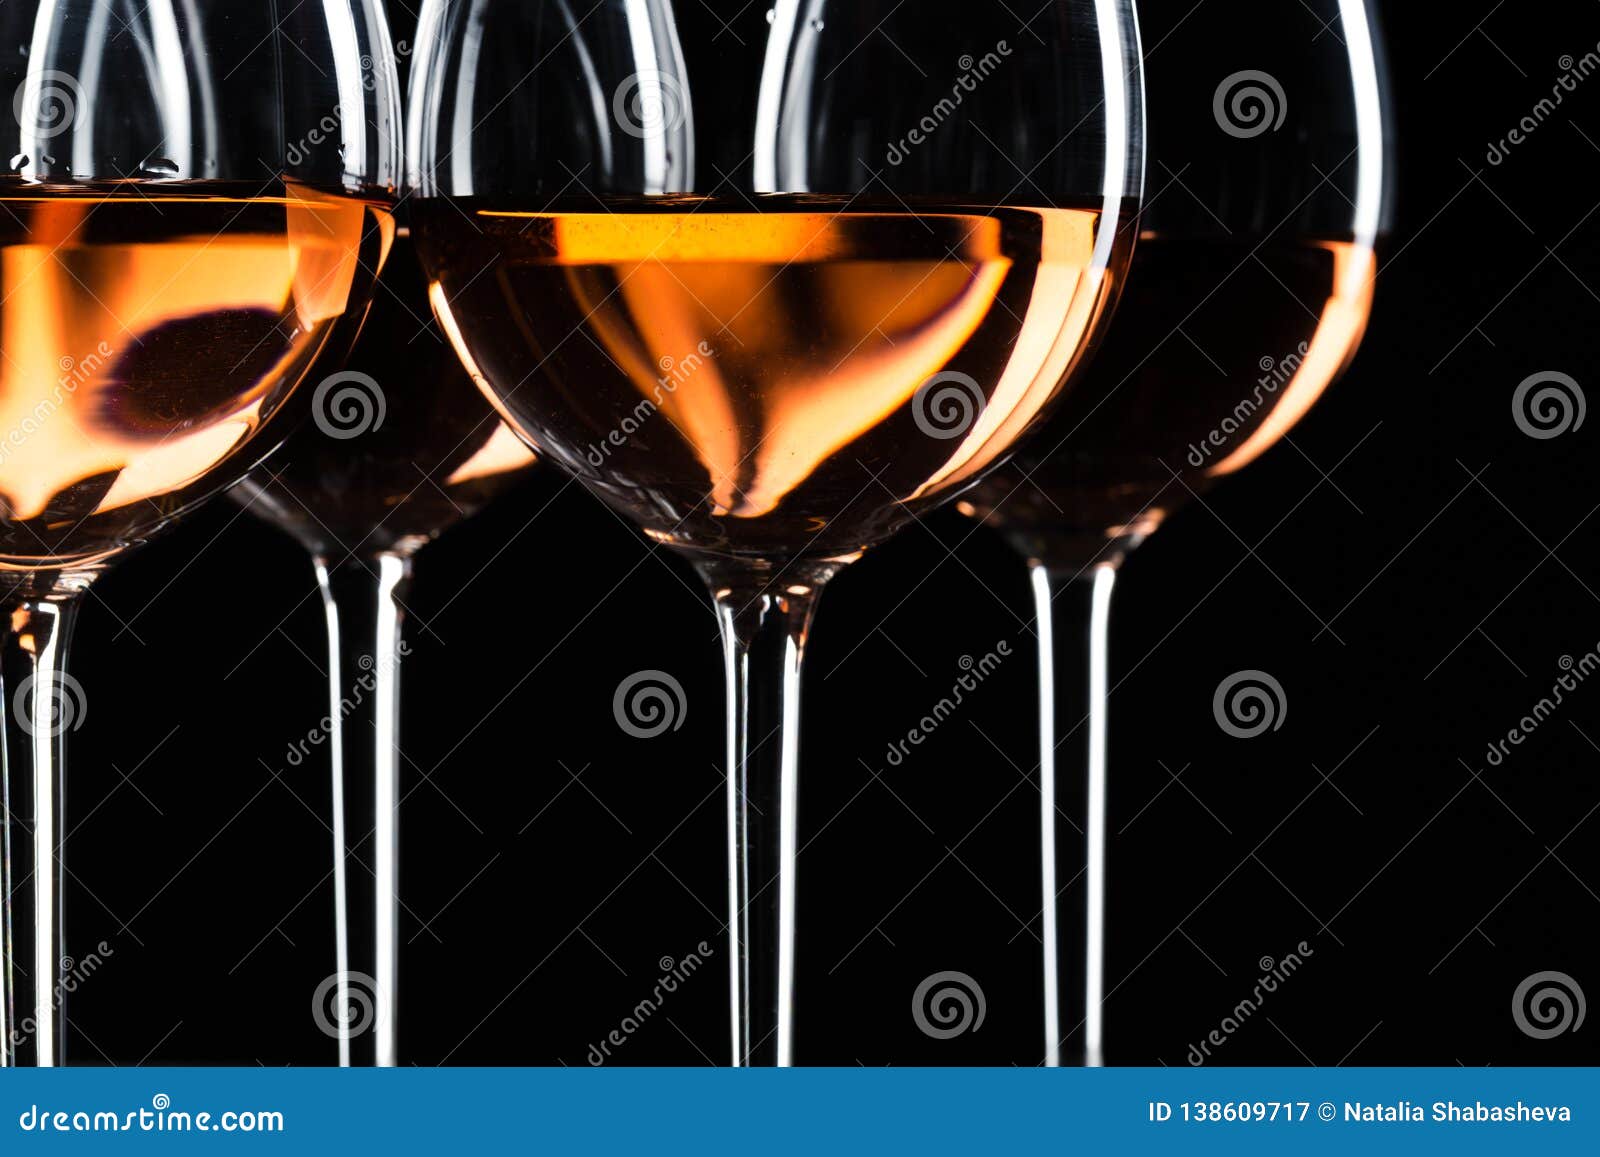 glasses of wine in darkness